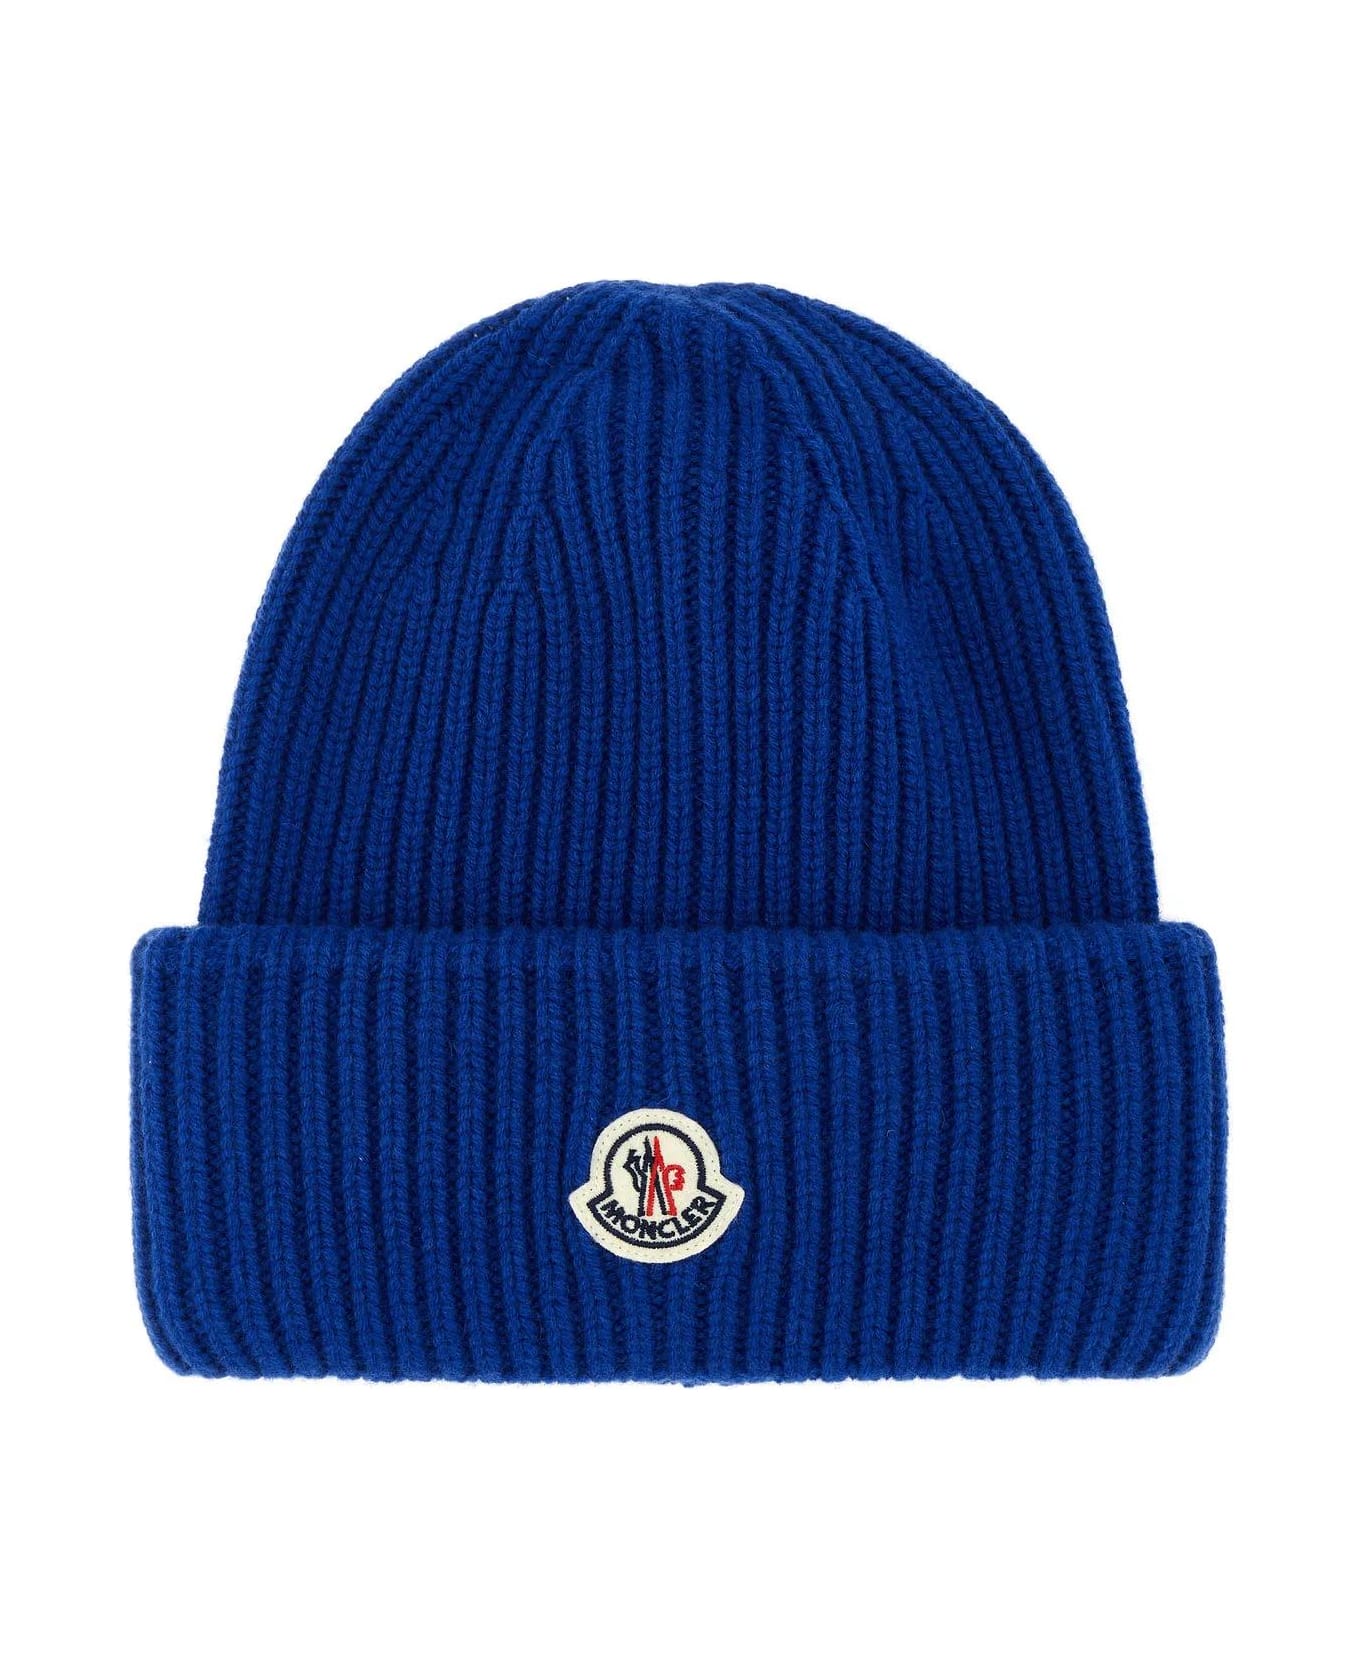 Moncler Electric Blue Wool Blend Beanie Hat - Blue 帽子